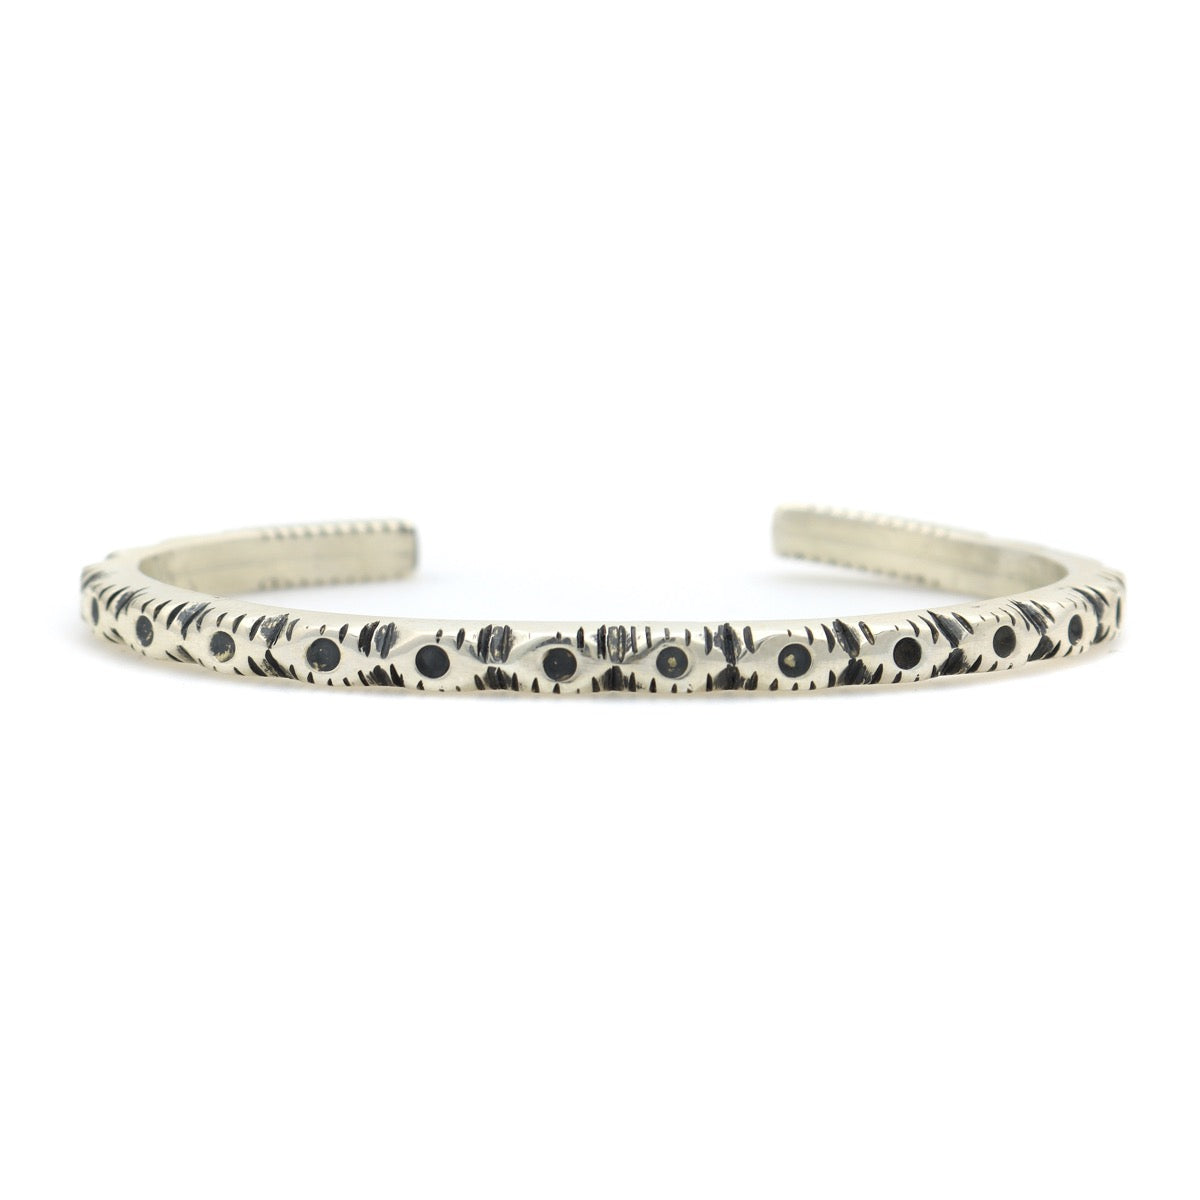 Sam Patania - Silver Bracelet with Carved Design, size 6.5 (J91699-0520-001) 5
